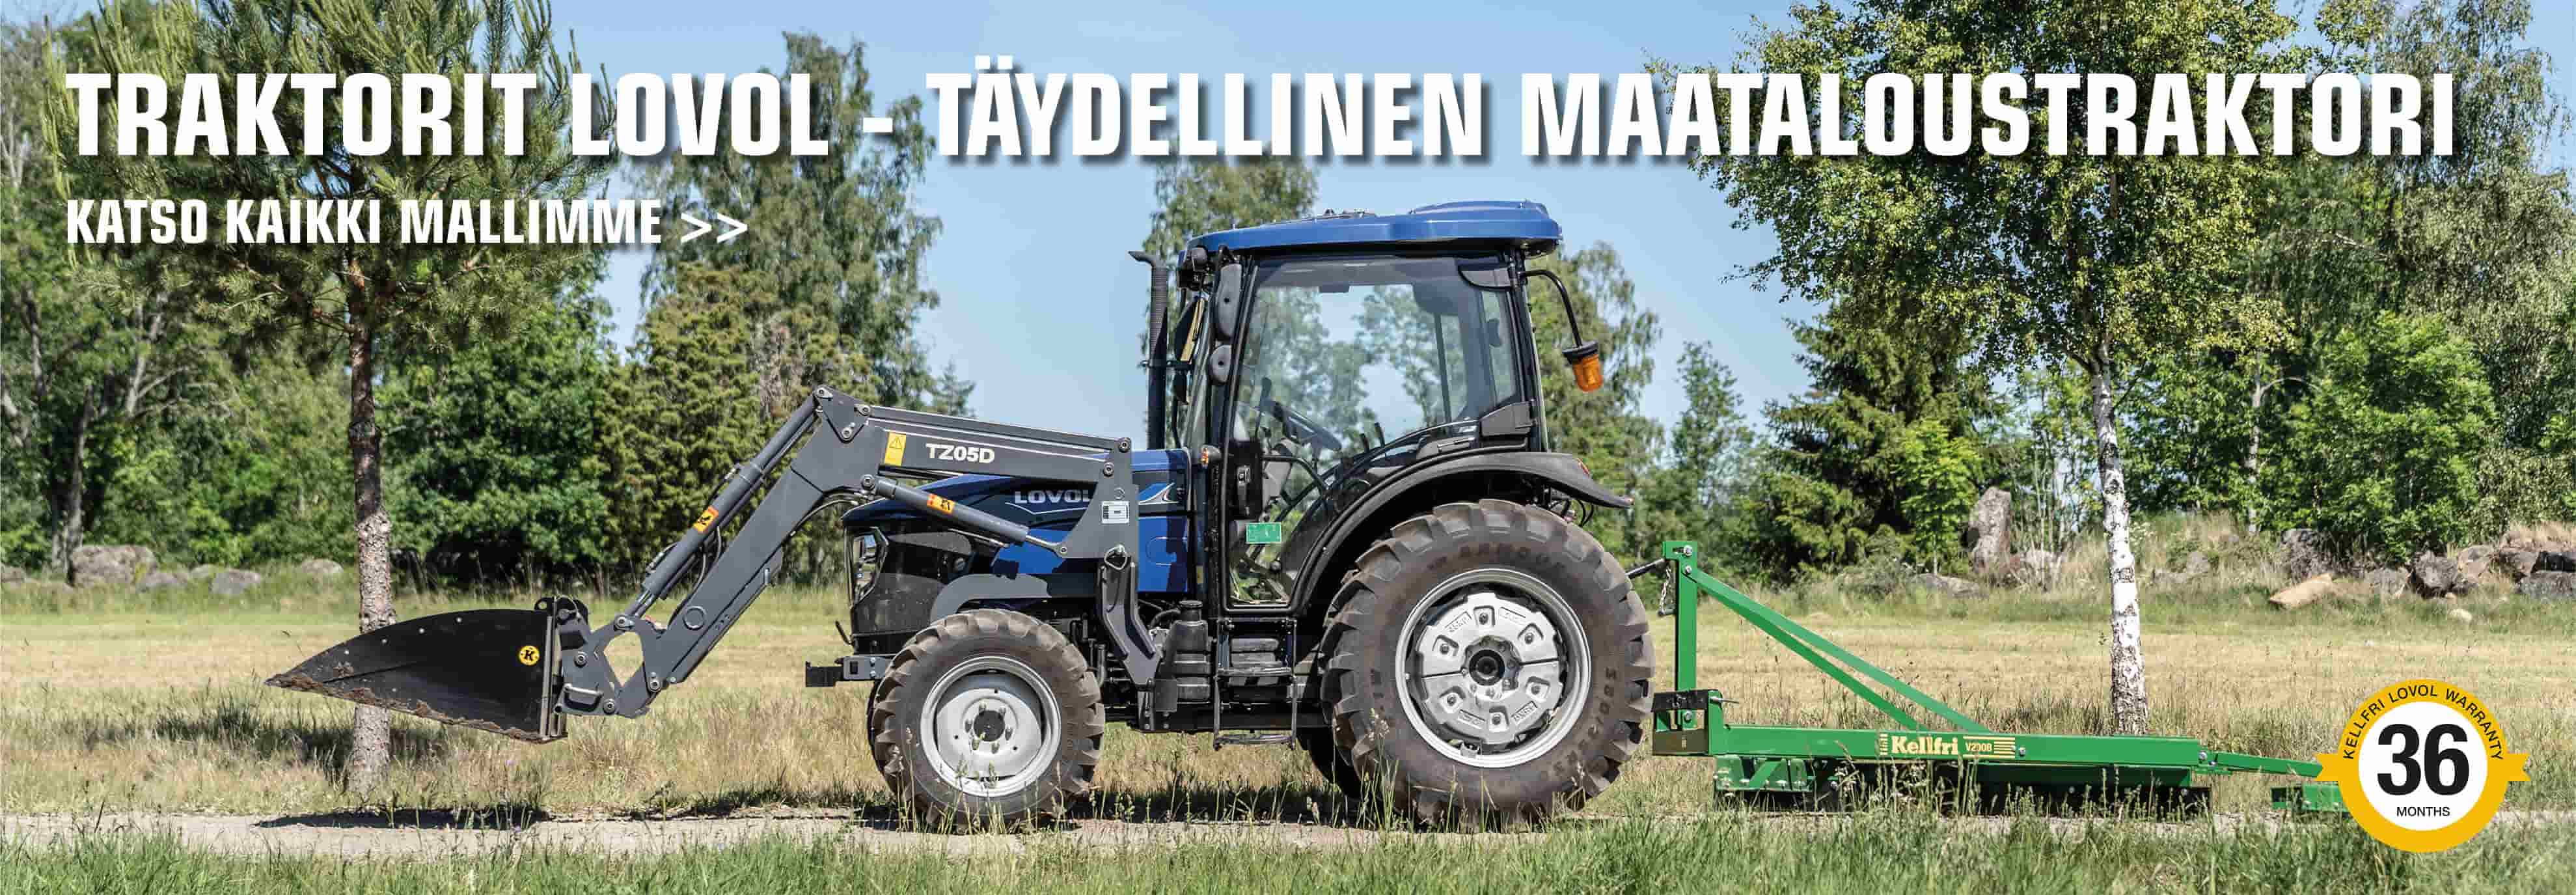 Traktor 240430 1900x660 02 FI.jpg